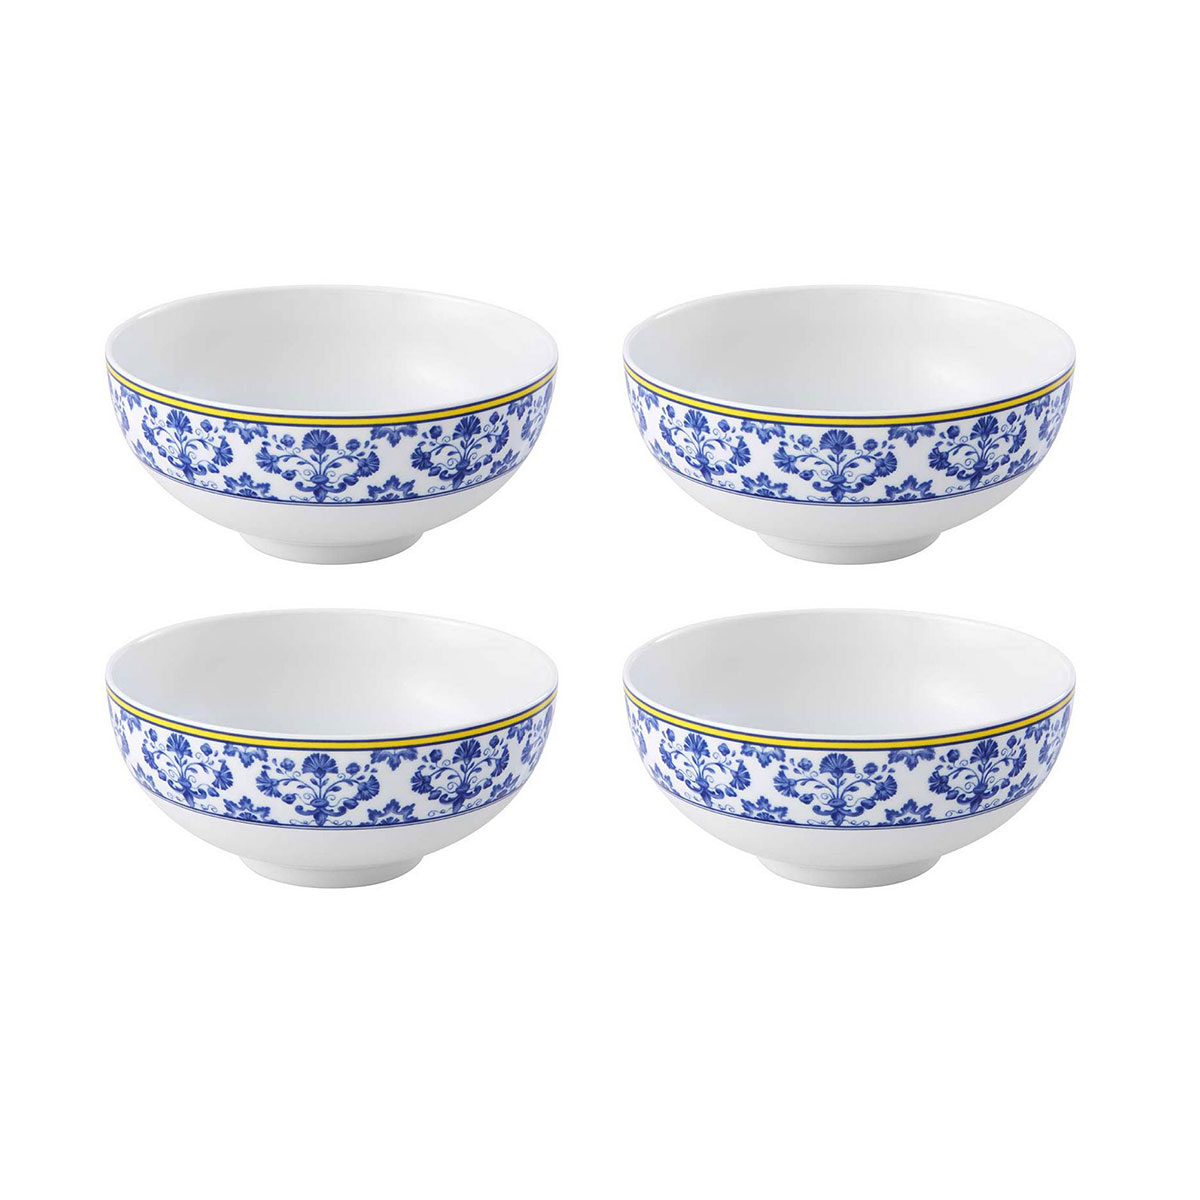 Vista Alegre Porcelain Castelo Branco Soup Bowl, Set of 4